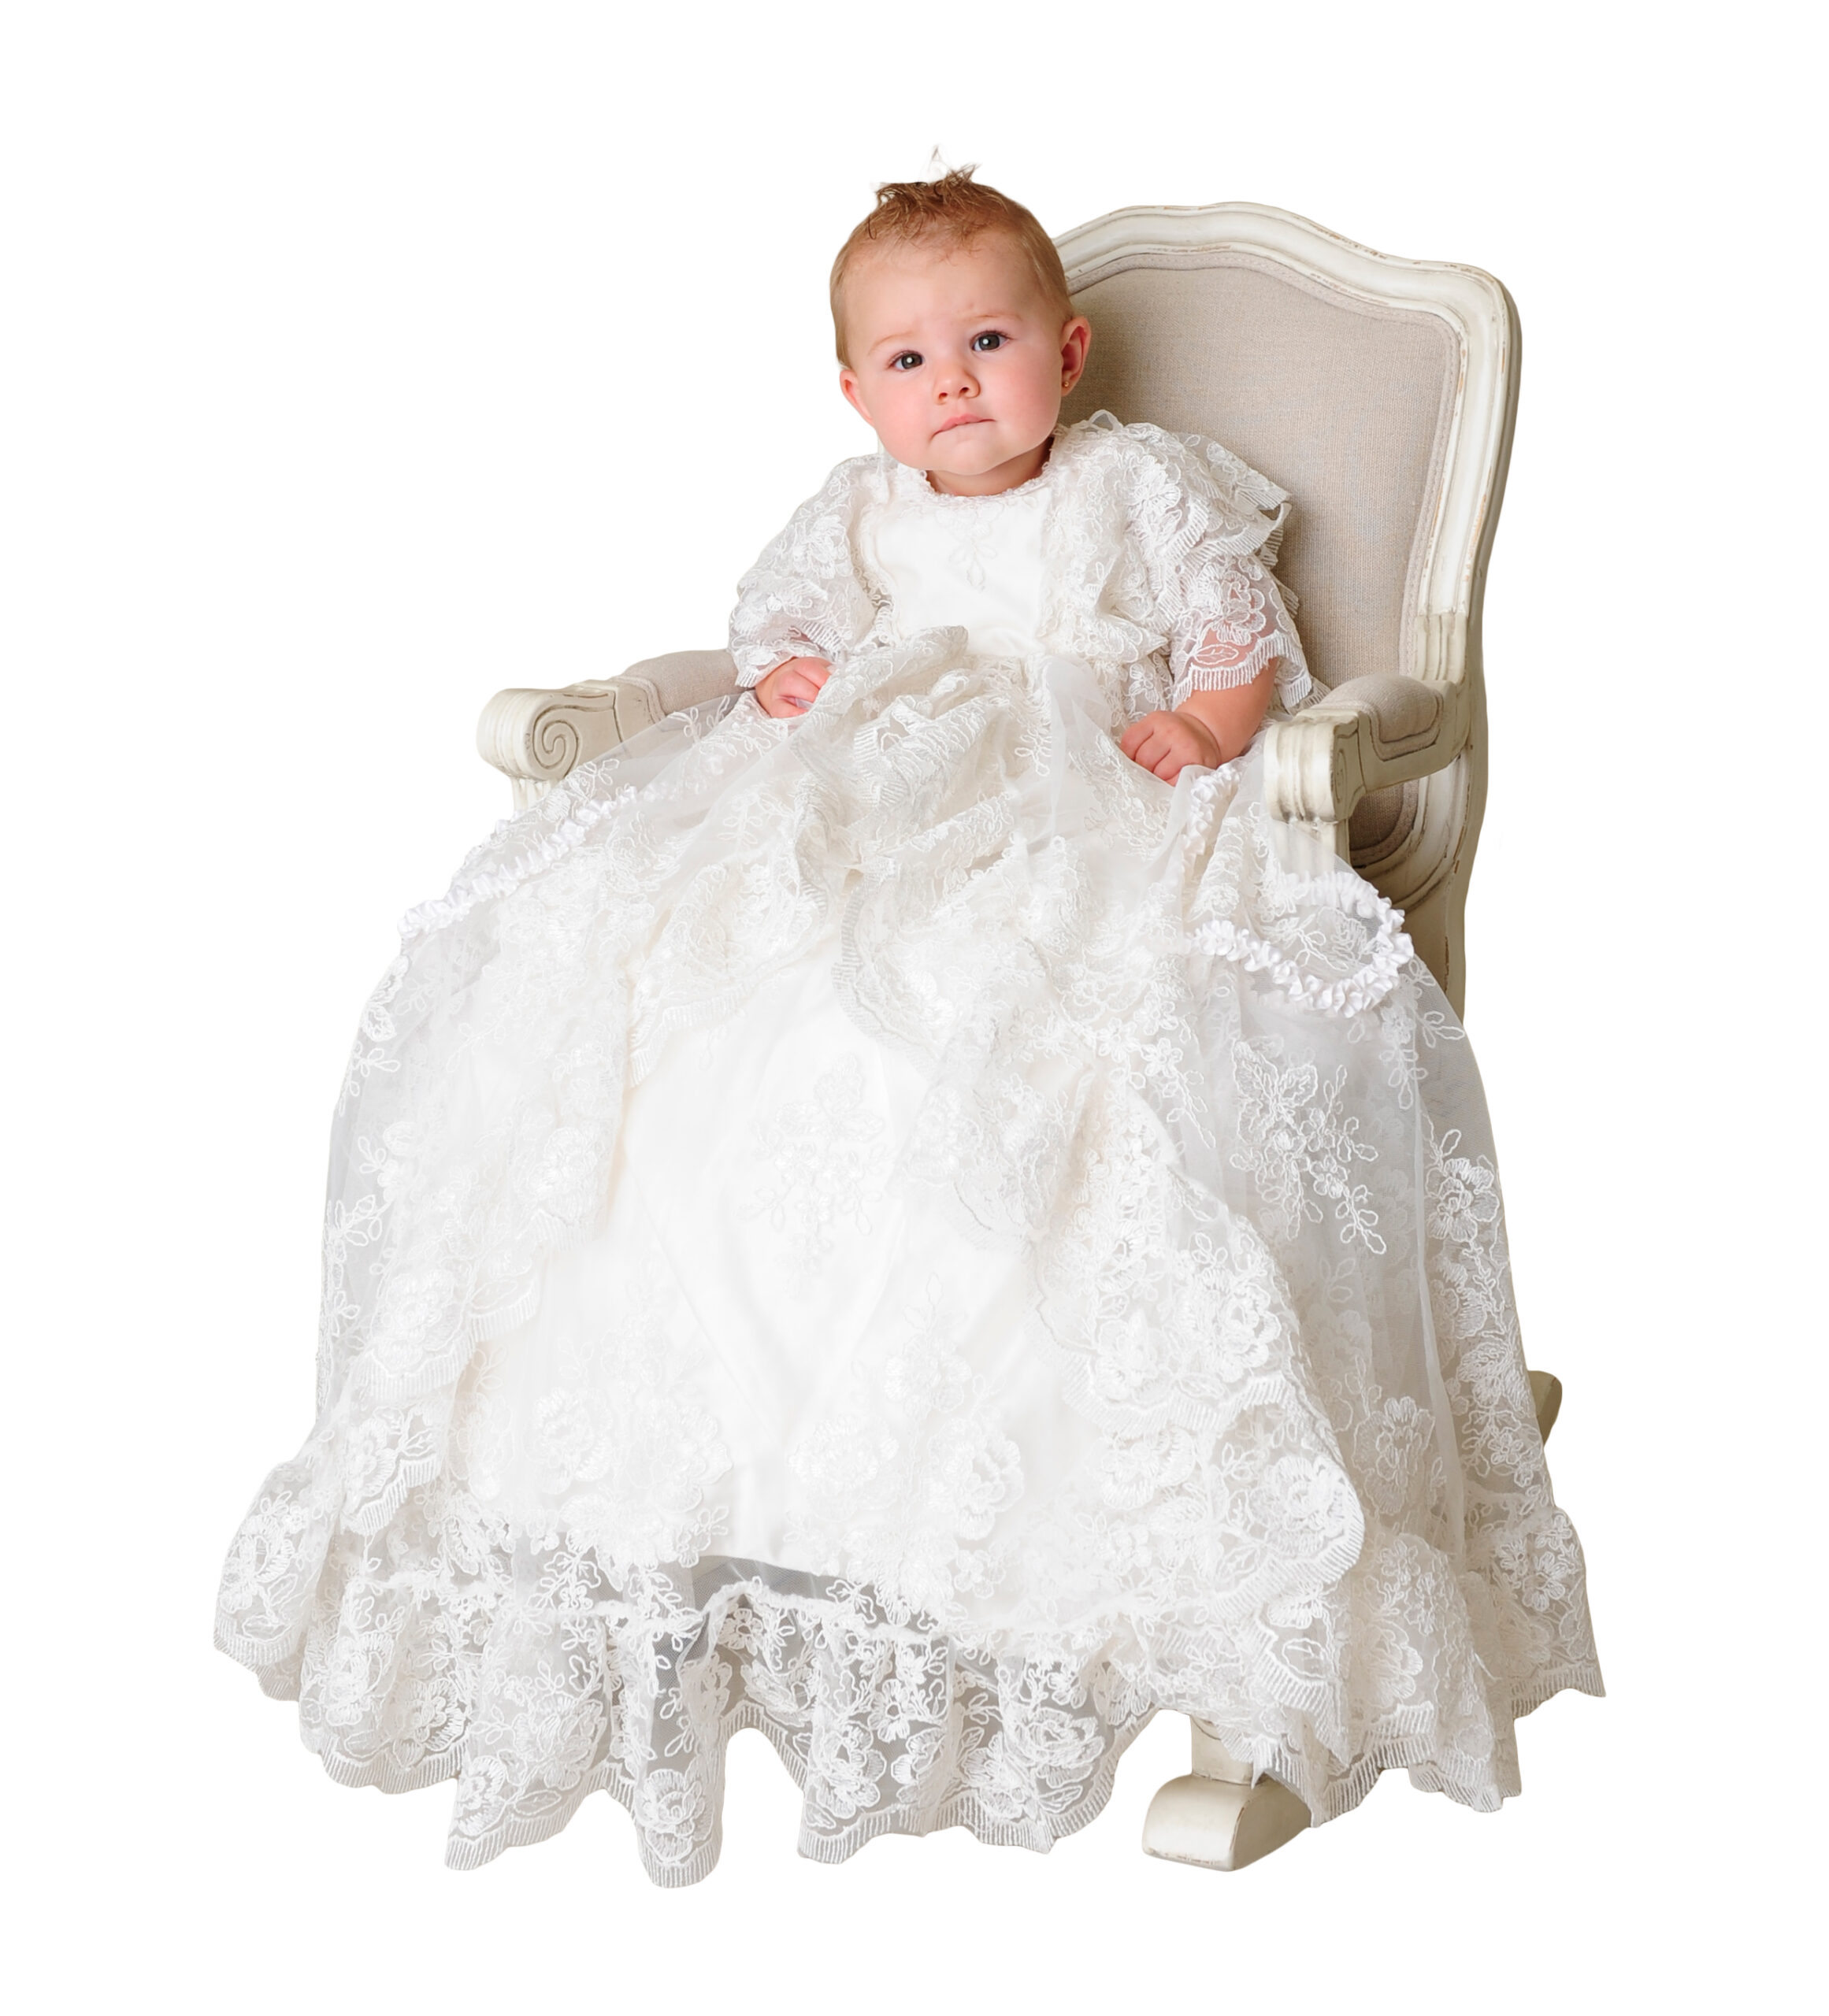 Royal Christening Gown model sitting